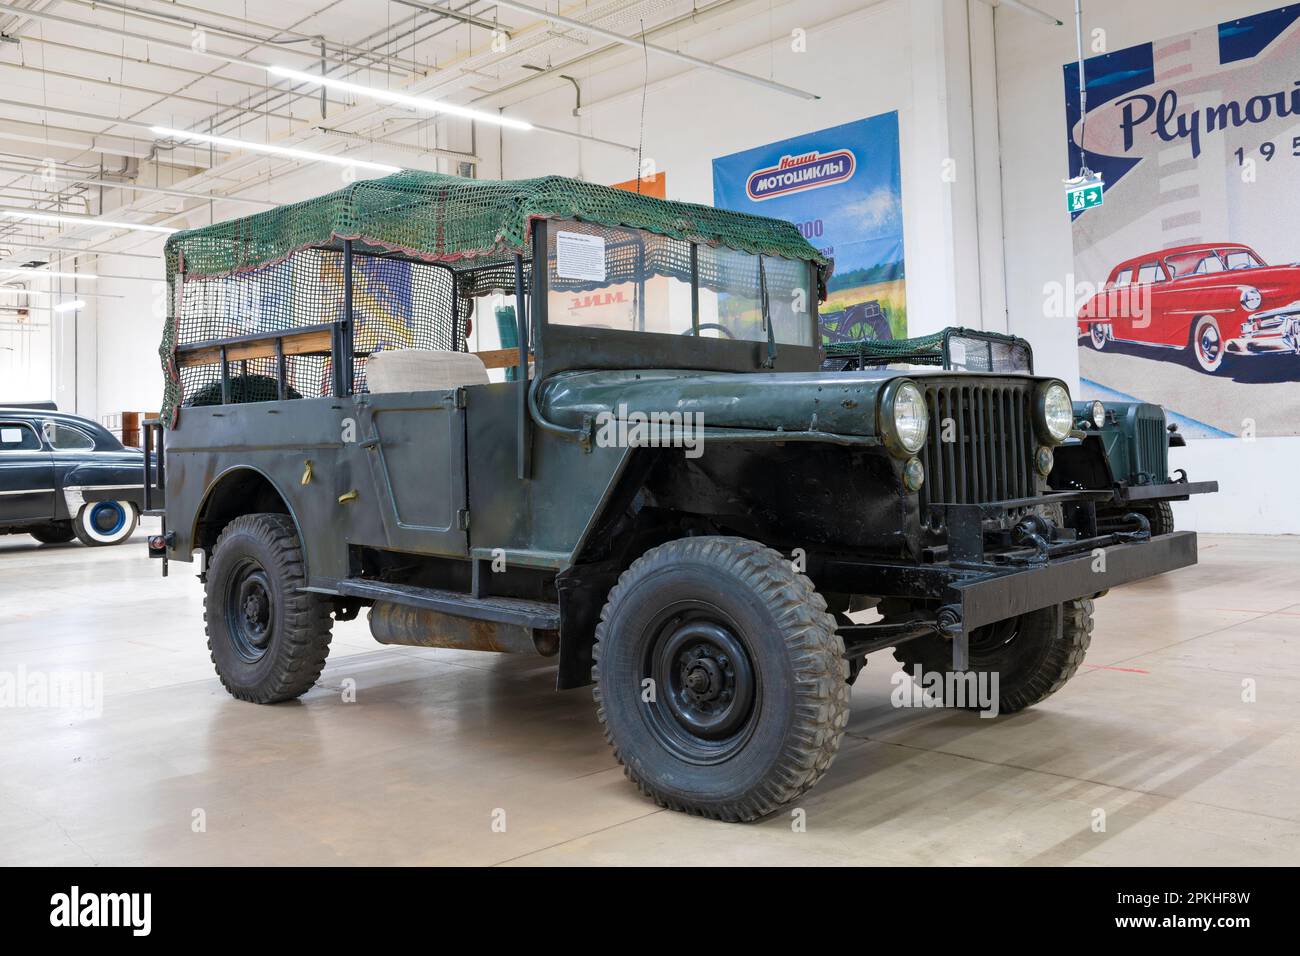 SANKT PETERSBURG, RUSSLAND - 29. MÄRZ 2023: Amerikanisches Militärfahrzeug Willys MB. Museum für Retro-Transport Stockfoto